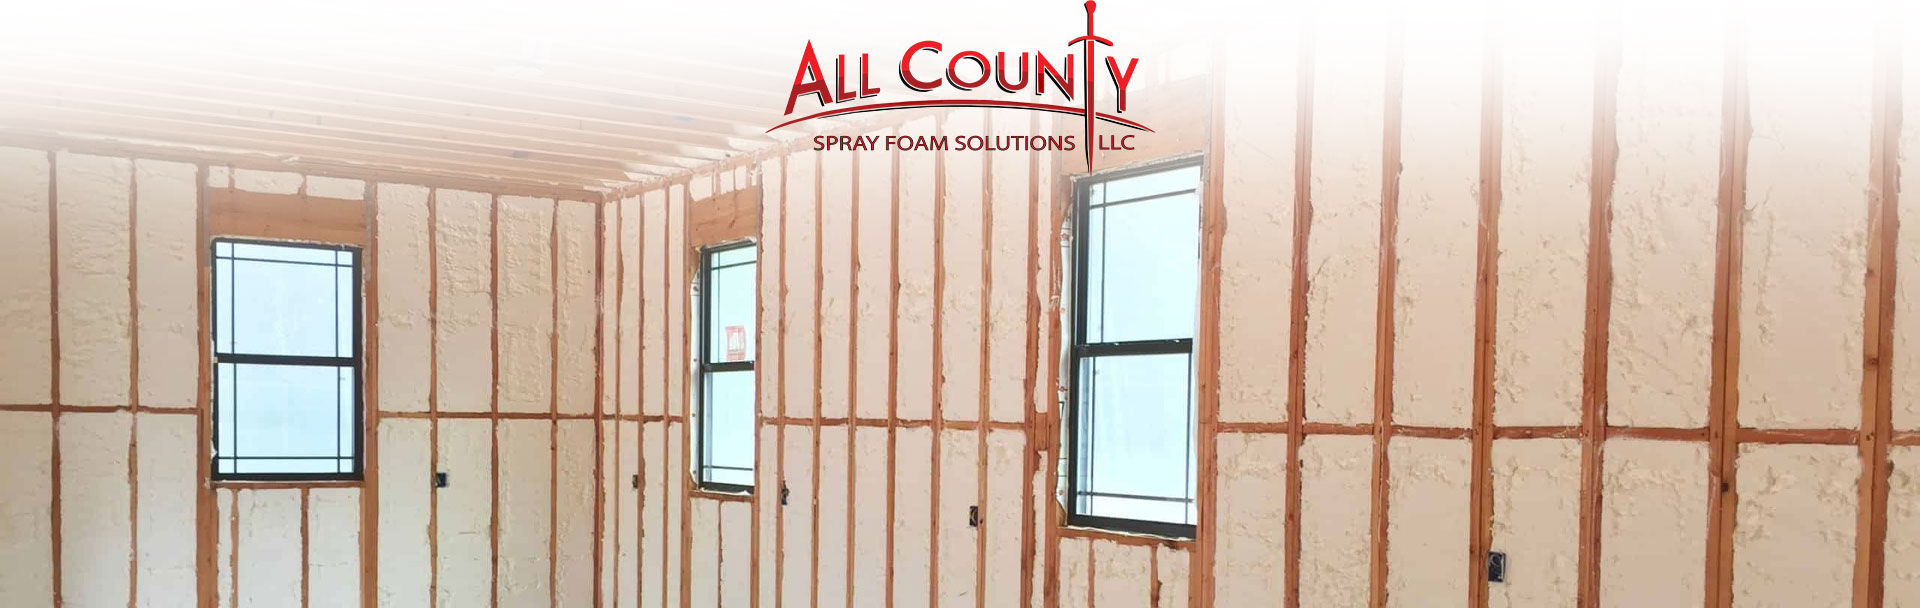 All County Spray Foam Solutions LLC. | Spray Foam, Insulation, SPF Roofing, Polyurea Coating, Attic Spray Foam Insulation, Wall Spray Foam Insulation, Crawl Space Spray Foam Insulation, Basement Spray Foam Insulation, Concrete Lifting, Void Filling, Moisture Issues | (NYC) Manhattan, Long Island, Brooklyn, Bronx, Queens, NY | 516.442.4222 | Email: ACSprayFoam@gmail.com  - footer image with All County logo